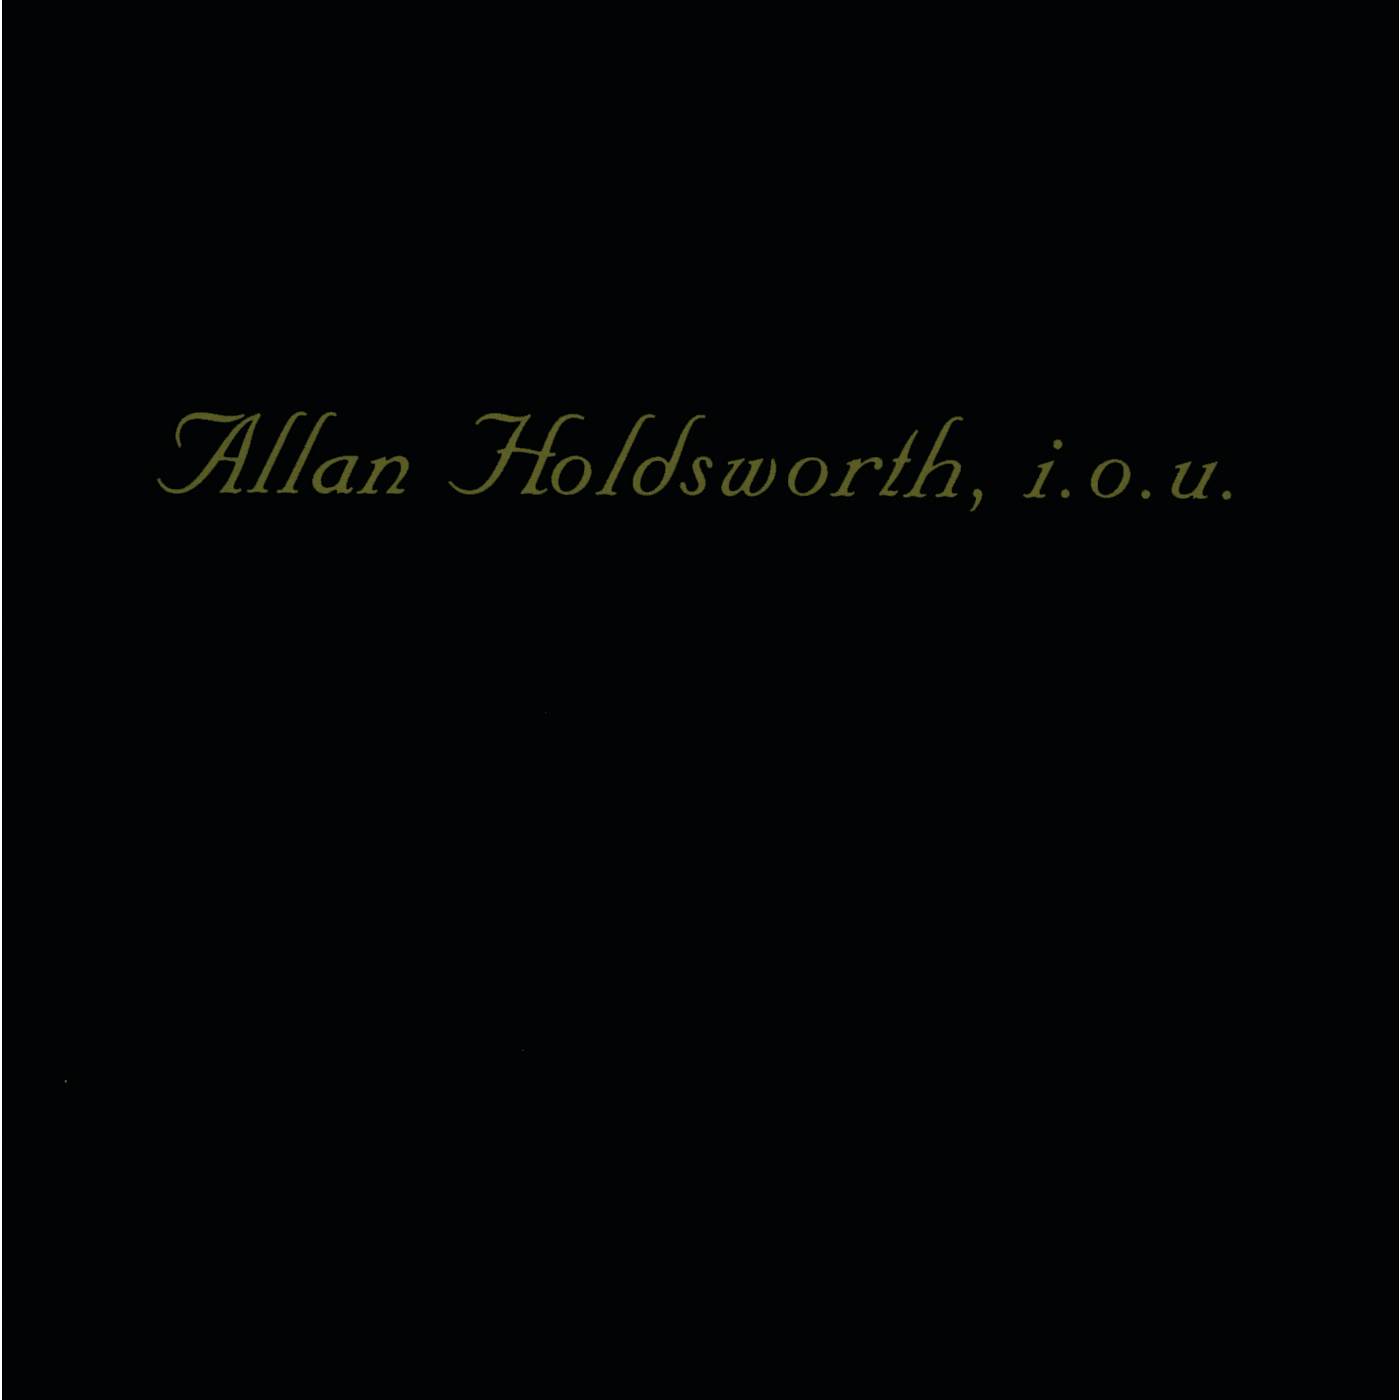 Allan Holdsworth I.O.U. CD